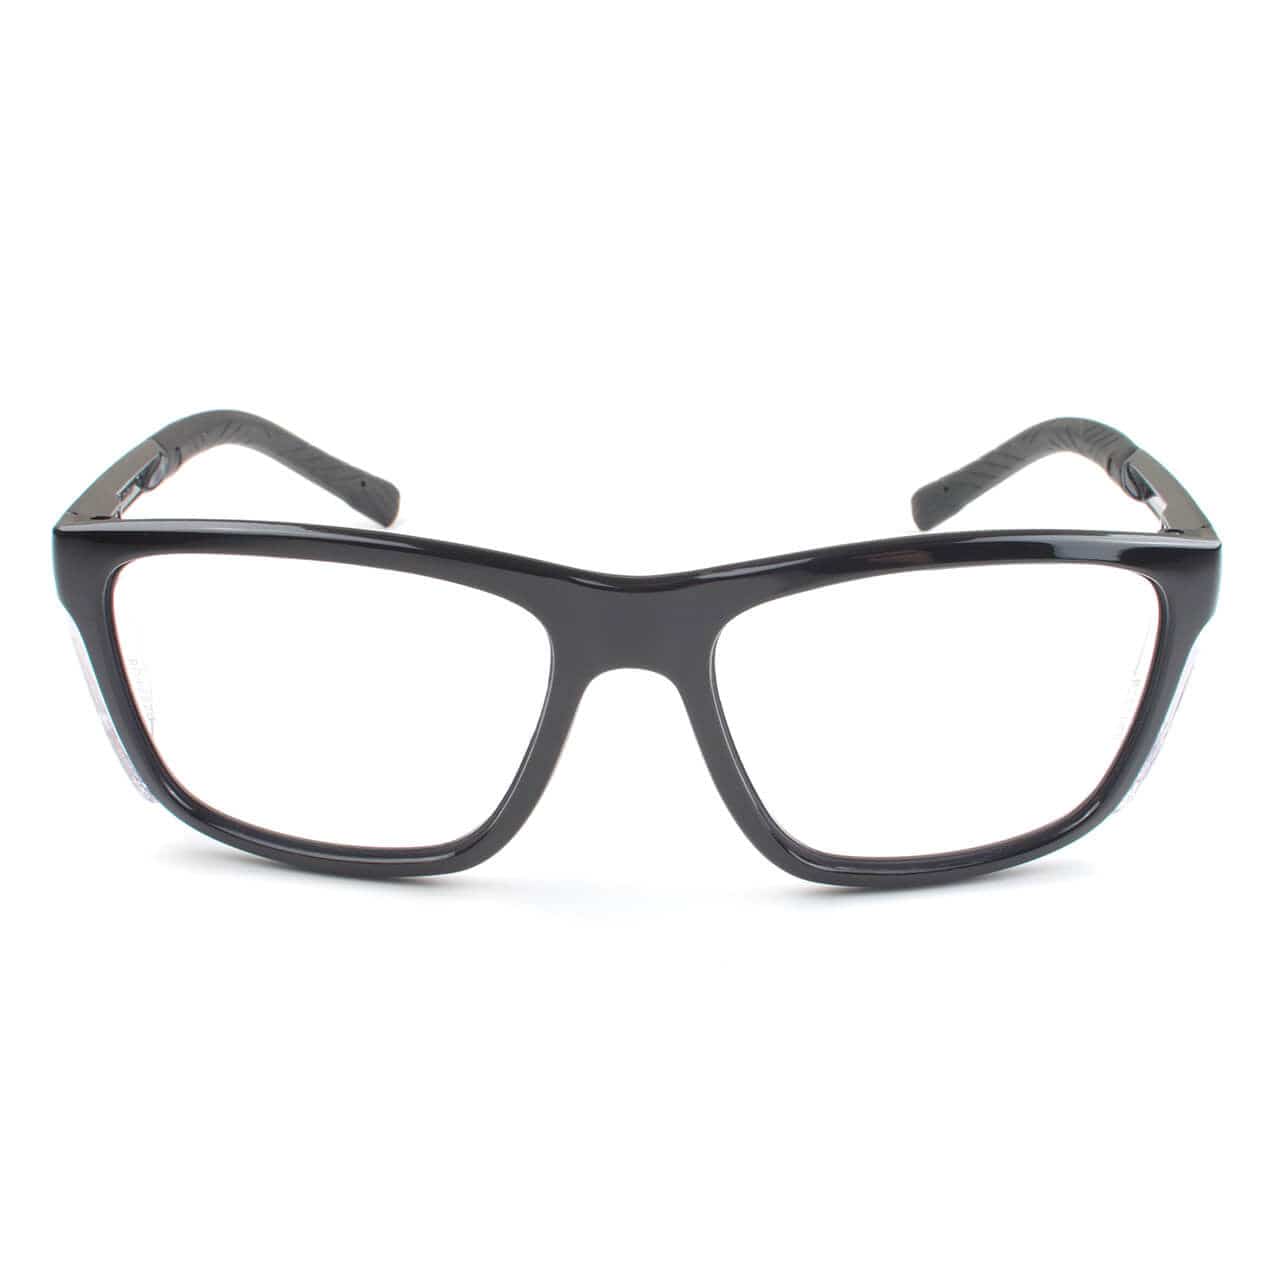 METEL M40 Safety Glasses Lightweight Retro Frame, Side Shields, Flexible Temples, Multiple Lens Options